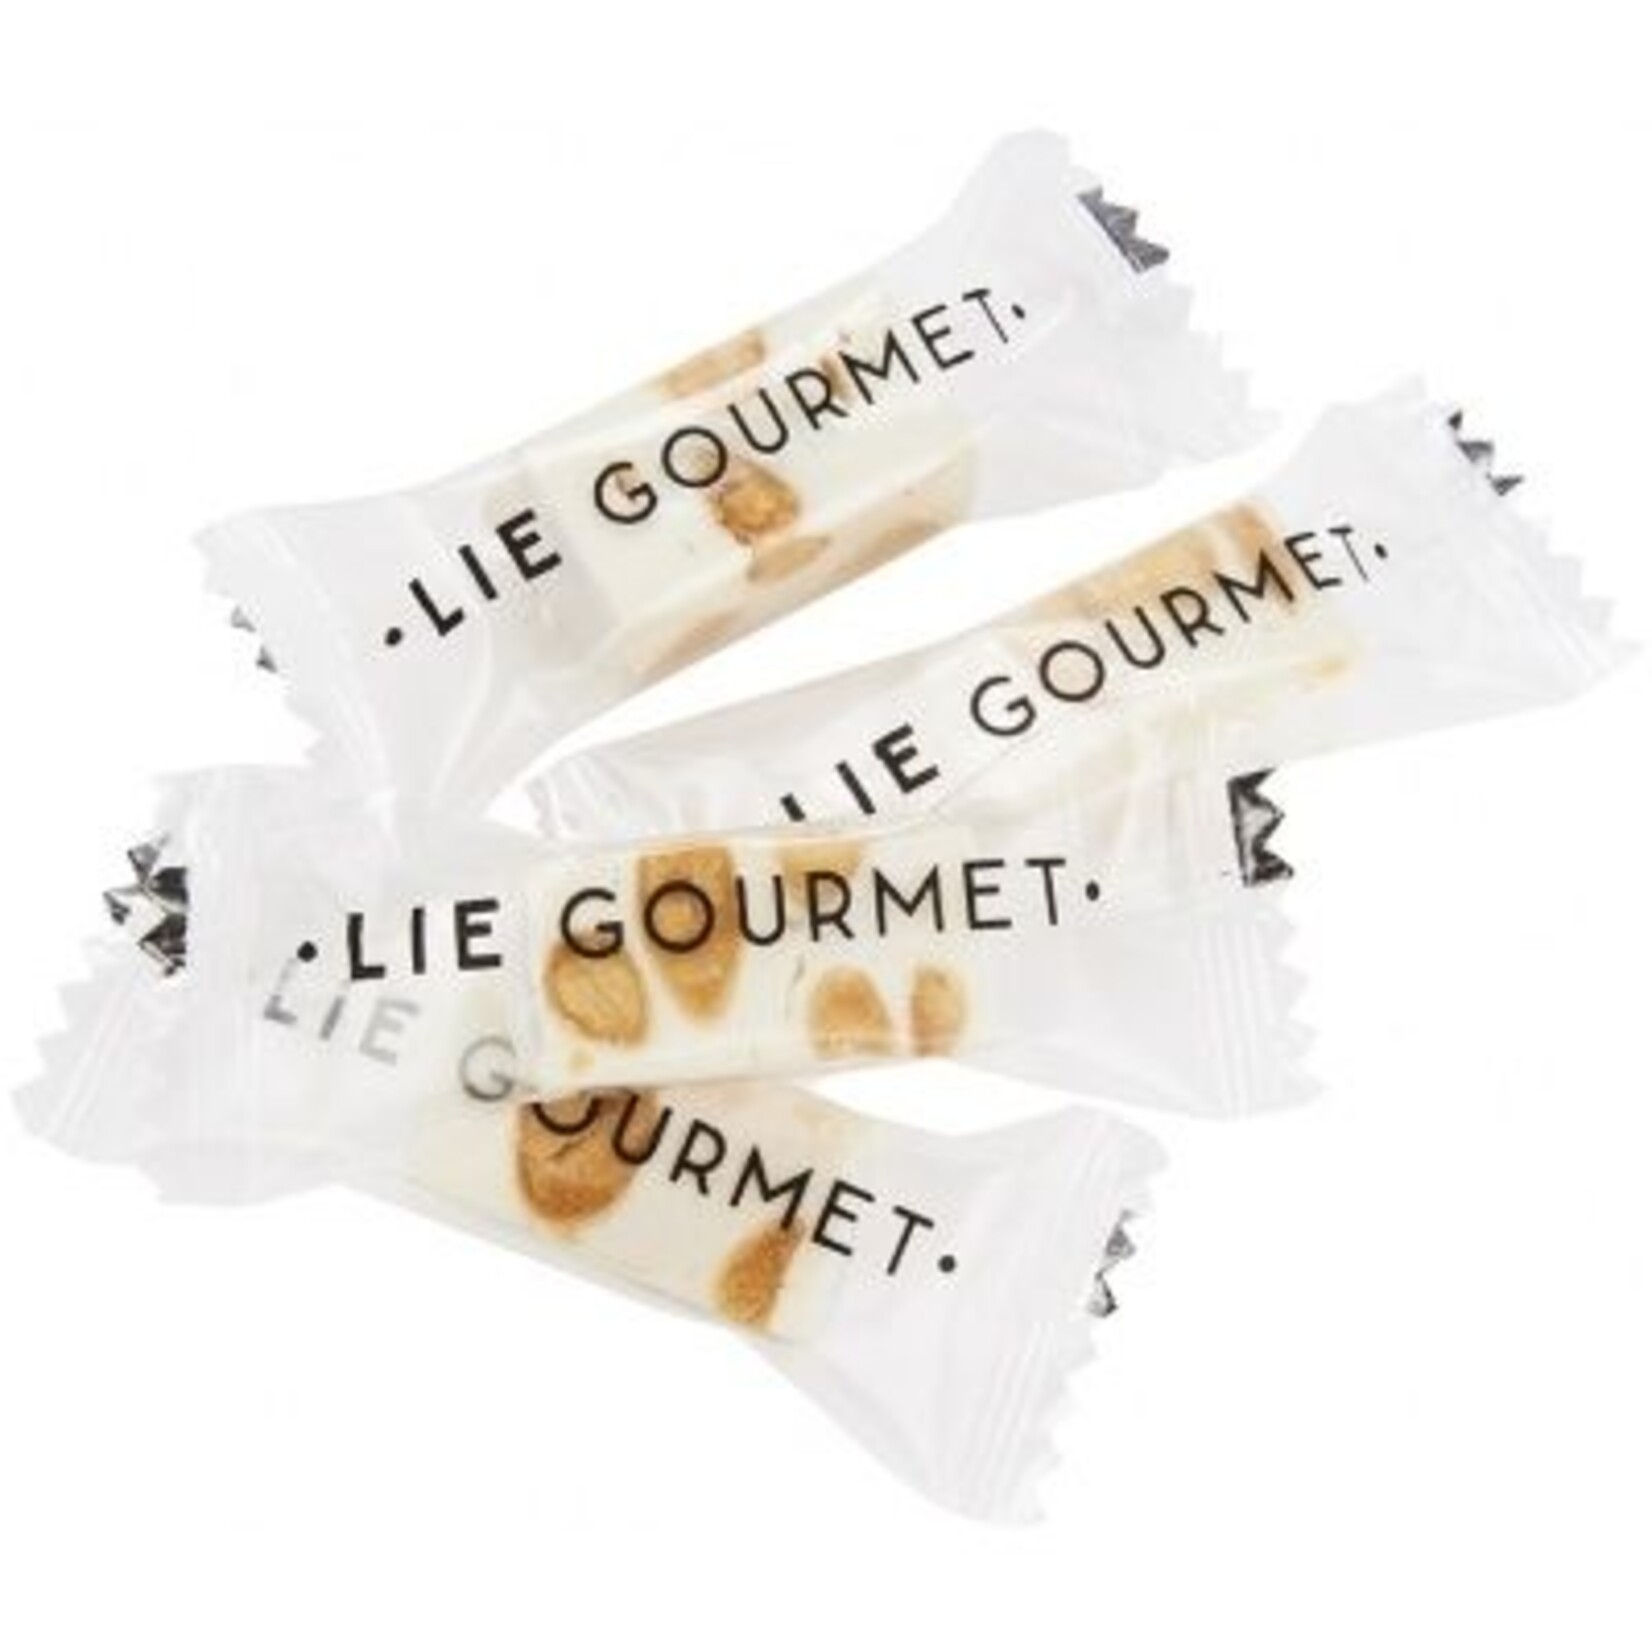 LIE GOURMET Lie Gourmet French nougat cubes - almonds (1 kg )